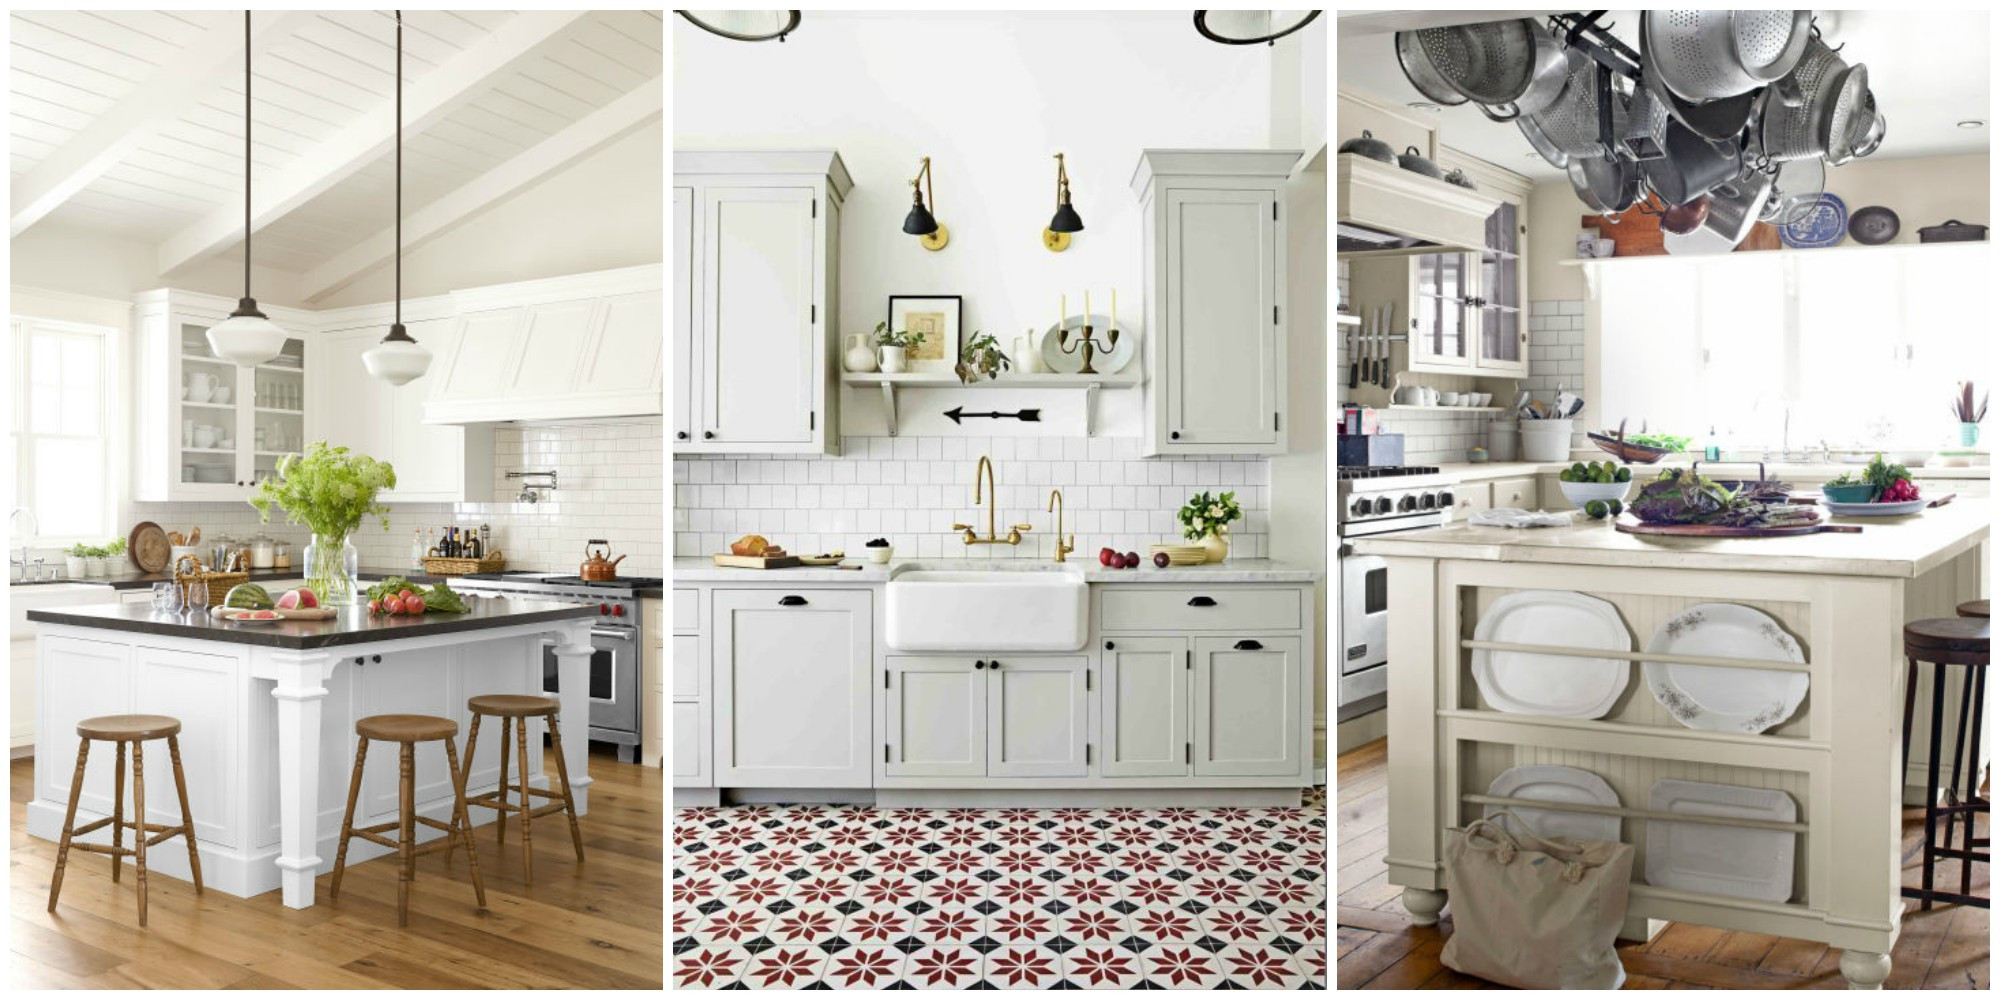 Kitchen Cabinet Paint White
 10 Best White Kitchen Cabinet Paint Colors Ideas for